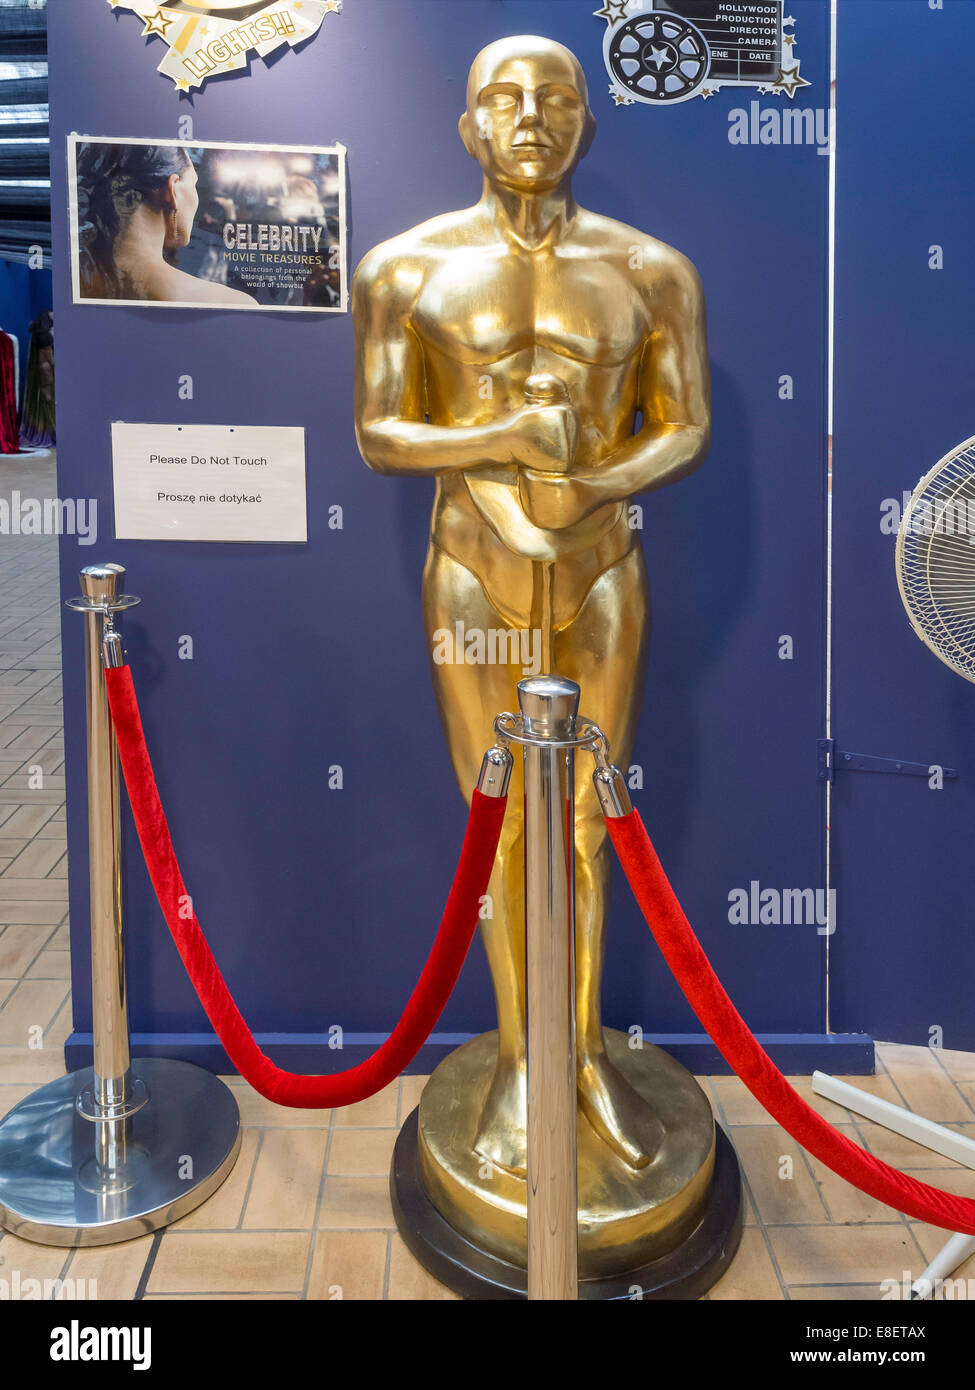 Celebrity Movie Treasures Exhibition life size model of golden Oscar Acadamy Award Stock Photo